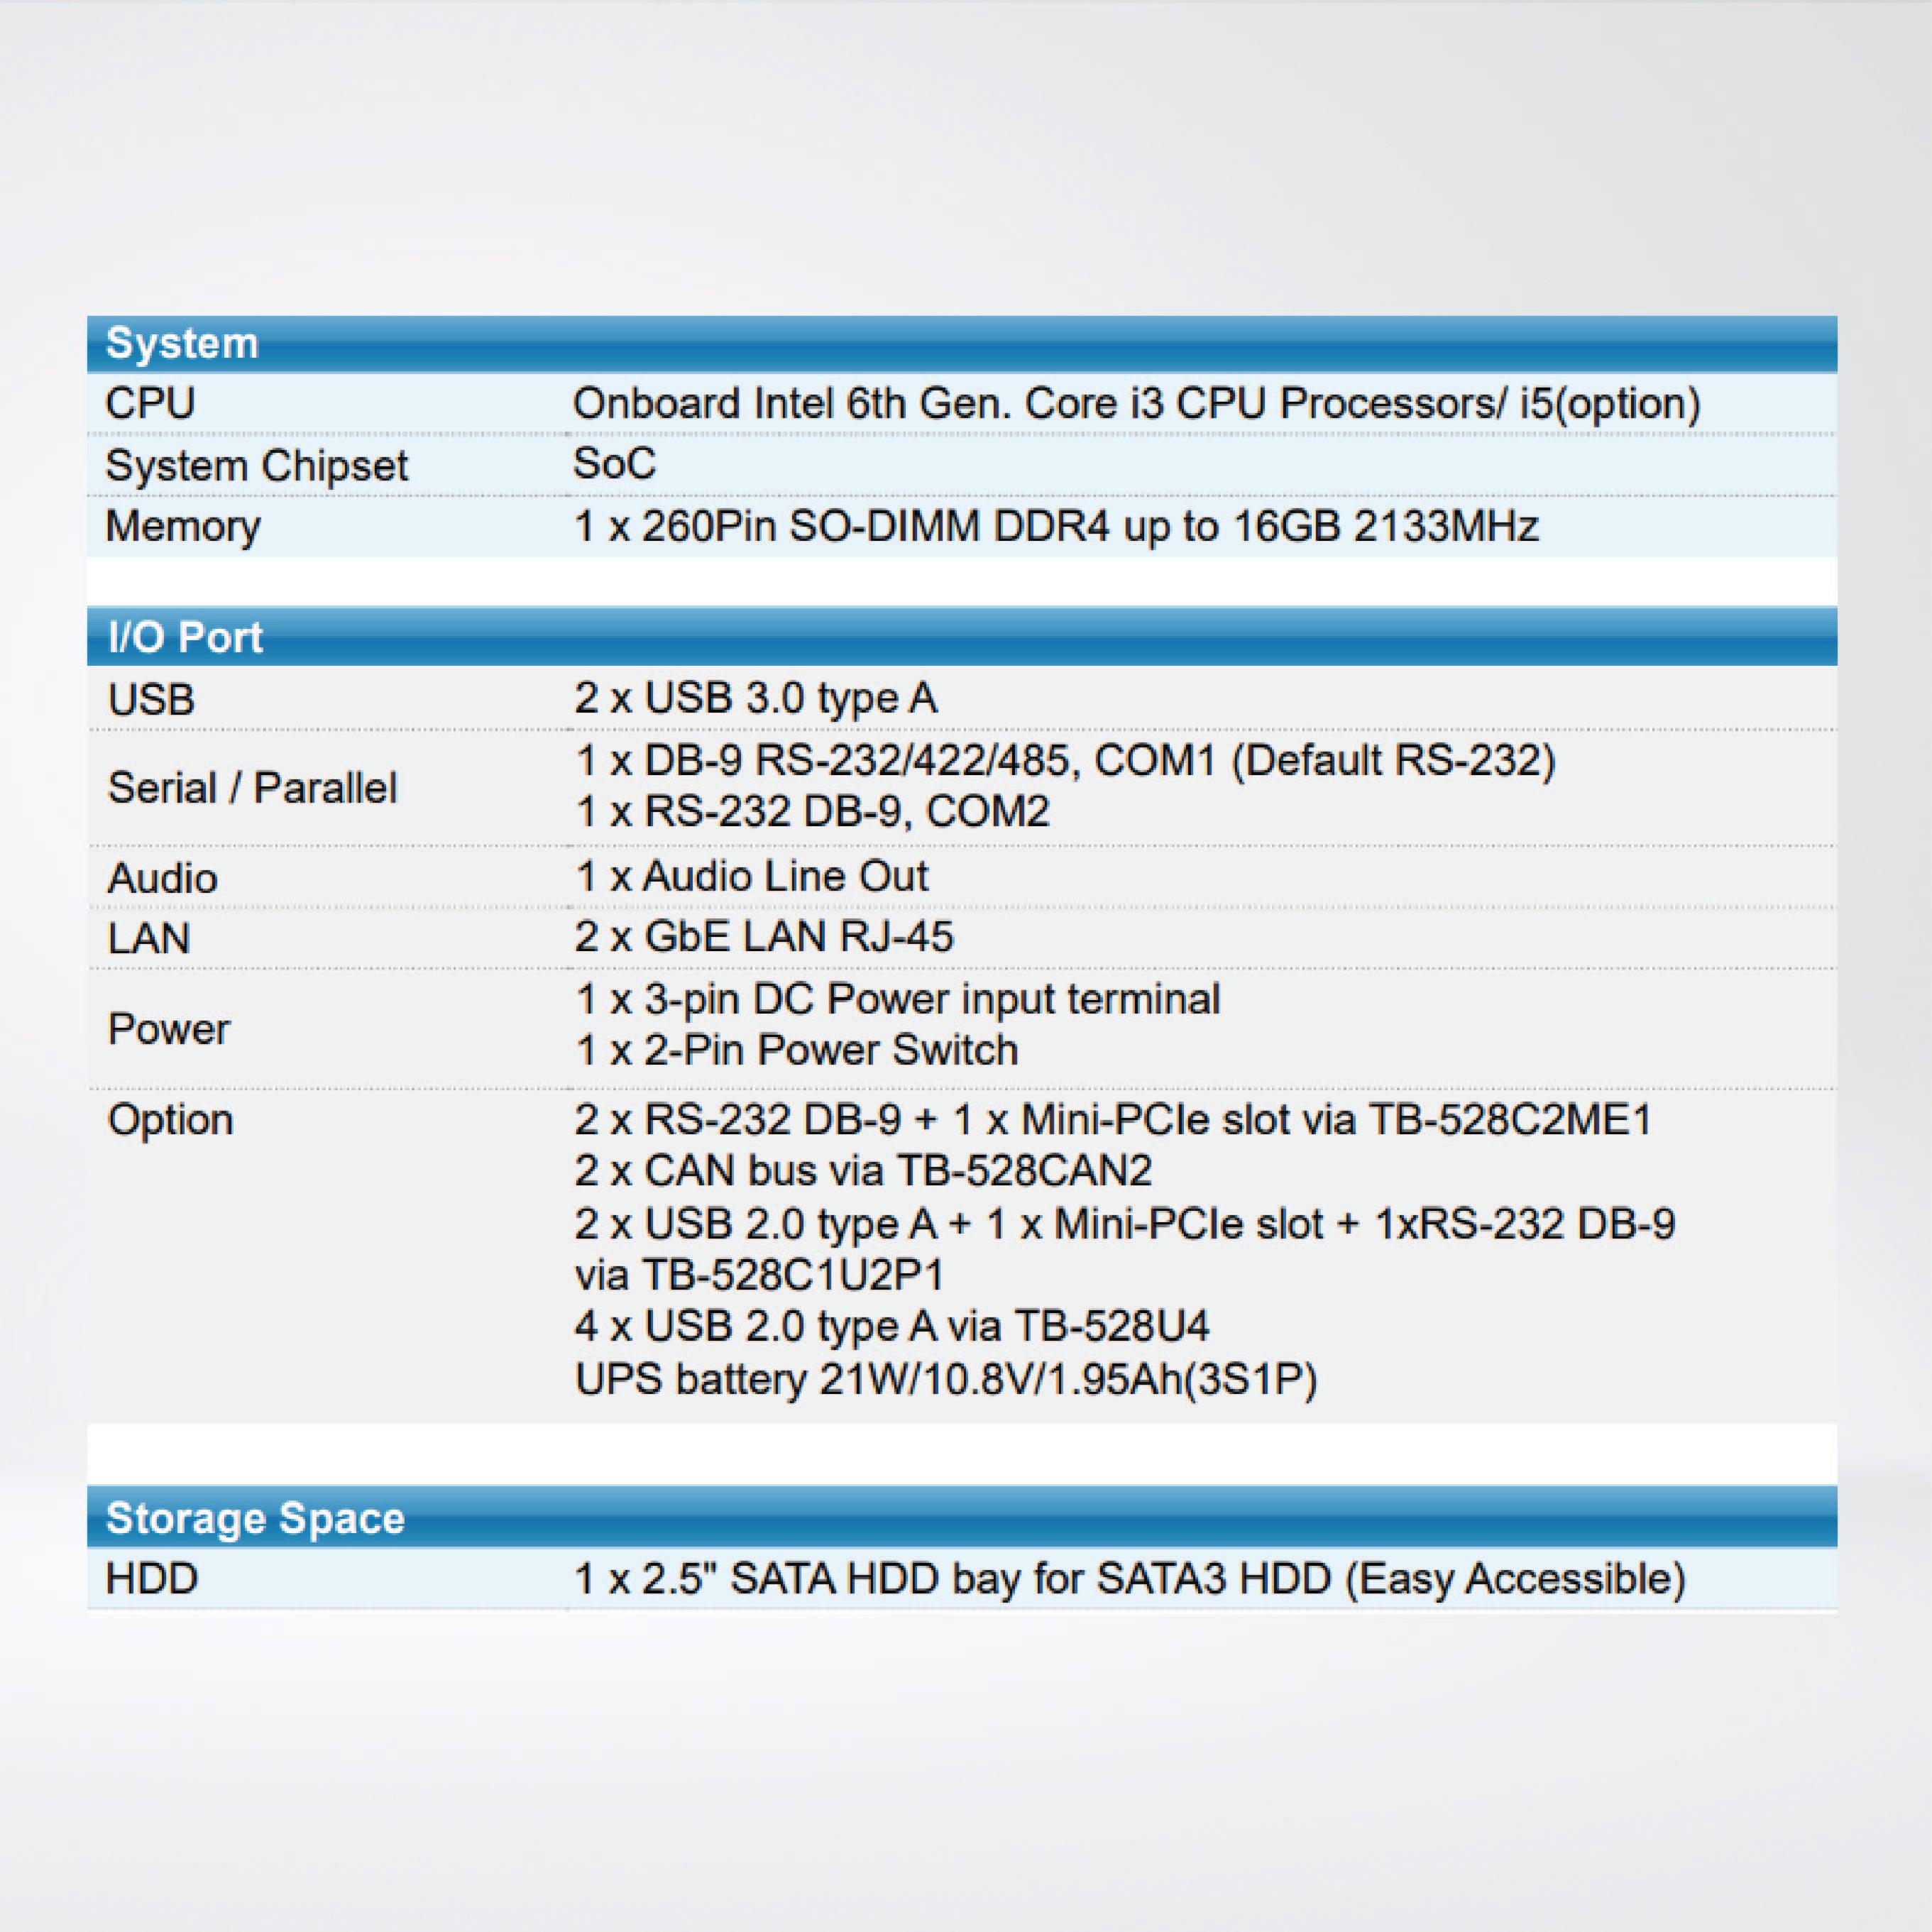 ARCHMI-917AP Intel 6th Gen. Core i3/i5, Fanless Industrial Compact Size Panel PC - Riverplus